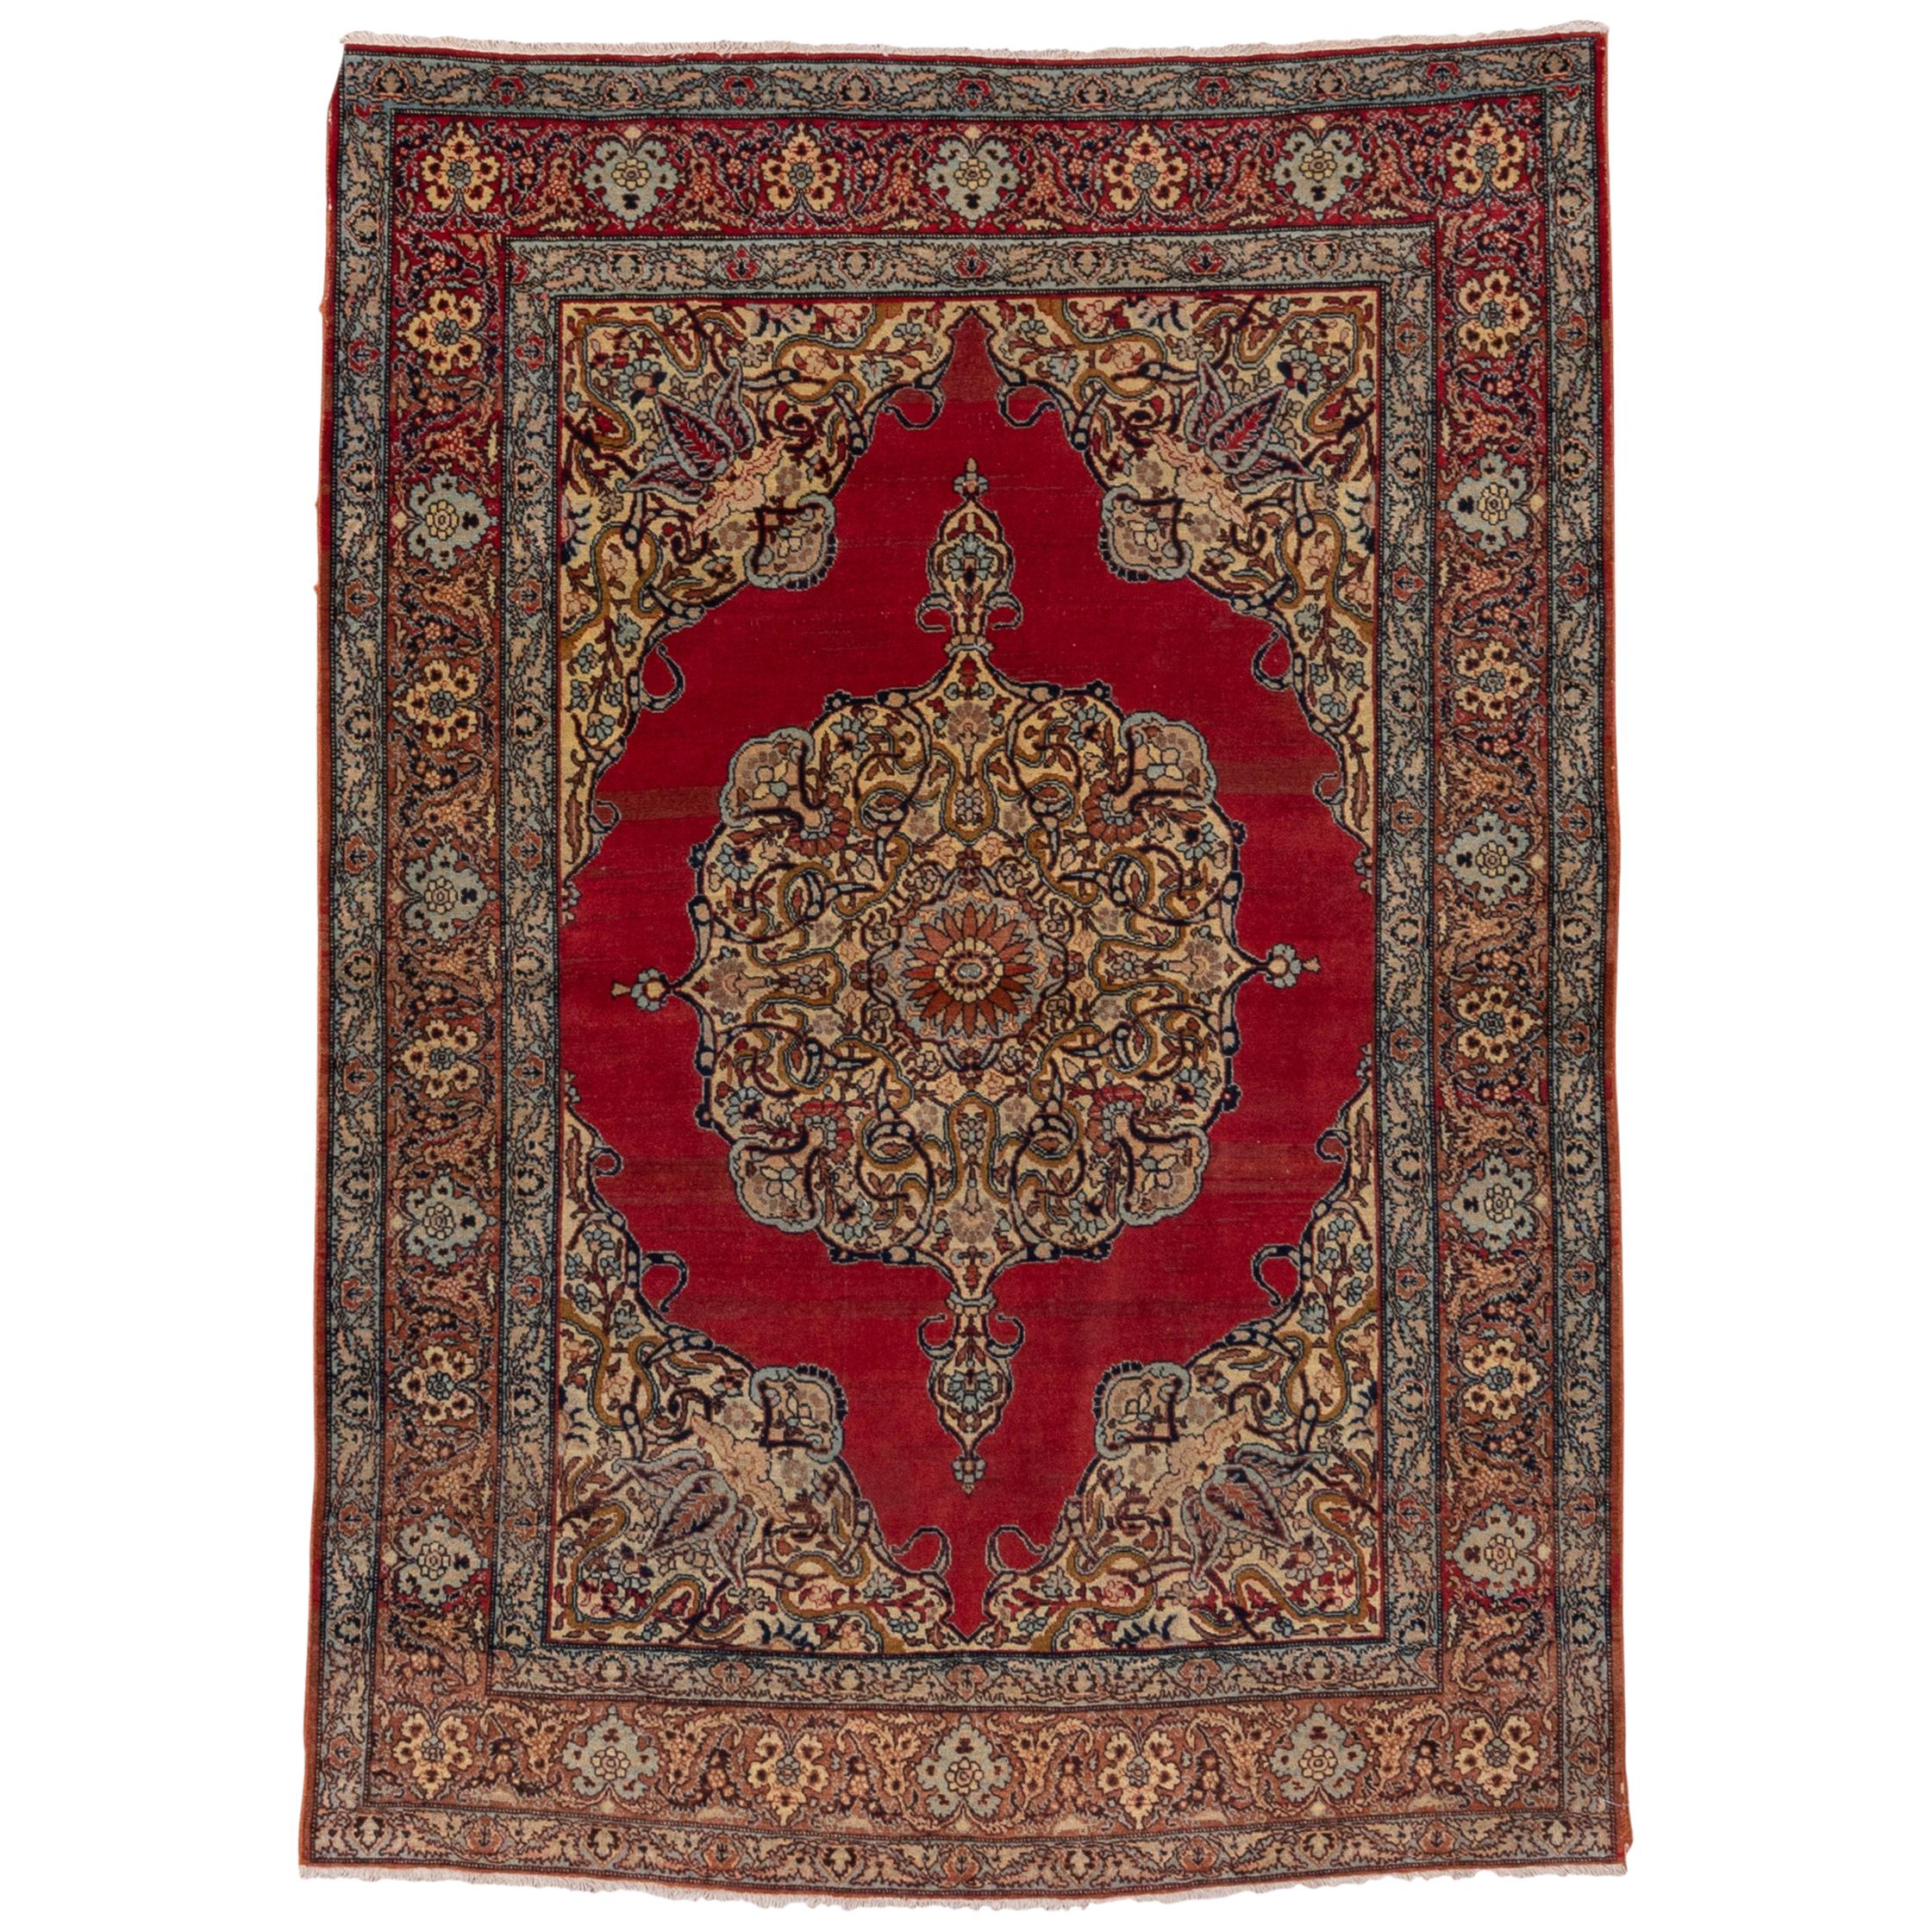 Antique Persian Tabriz Rug, Red Field, Coral Borders, Medium Pile